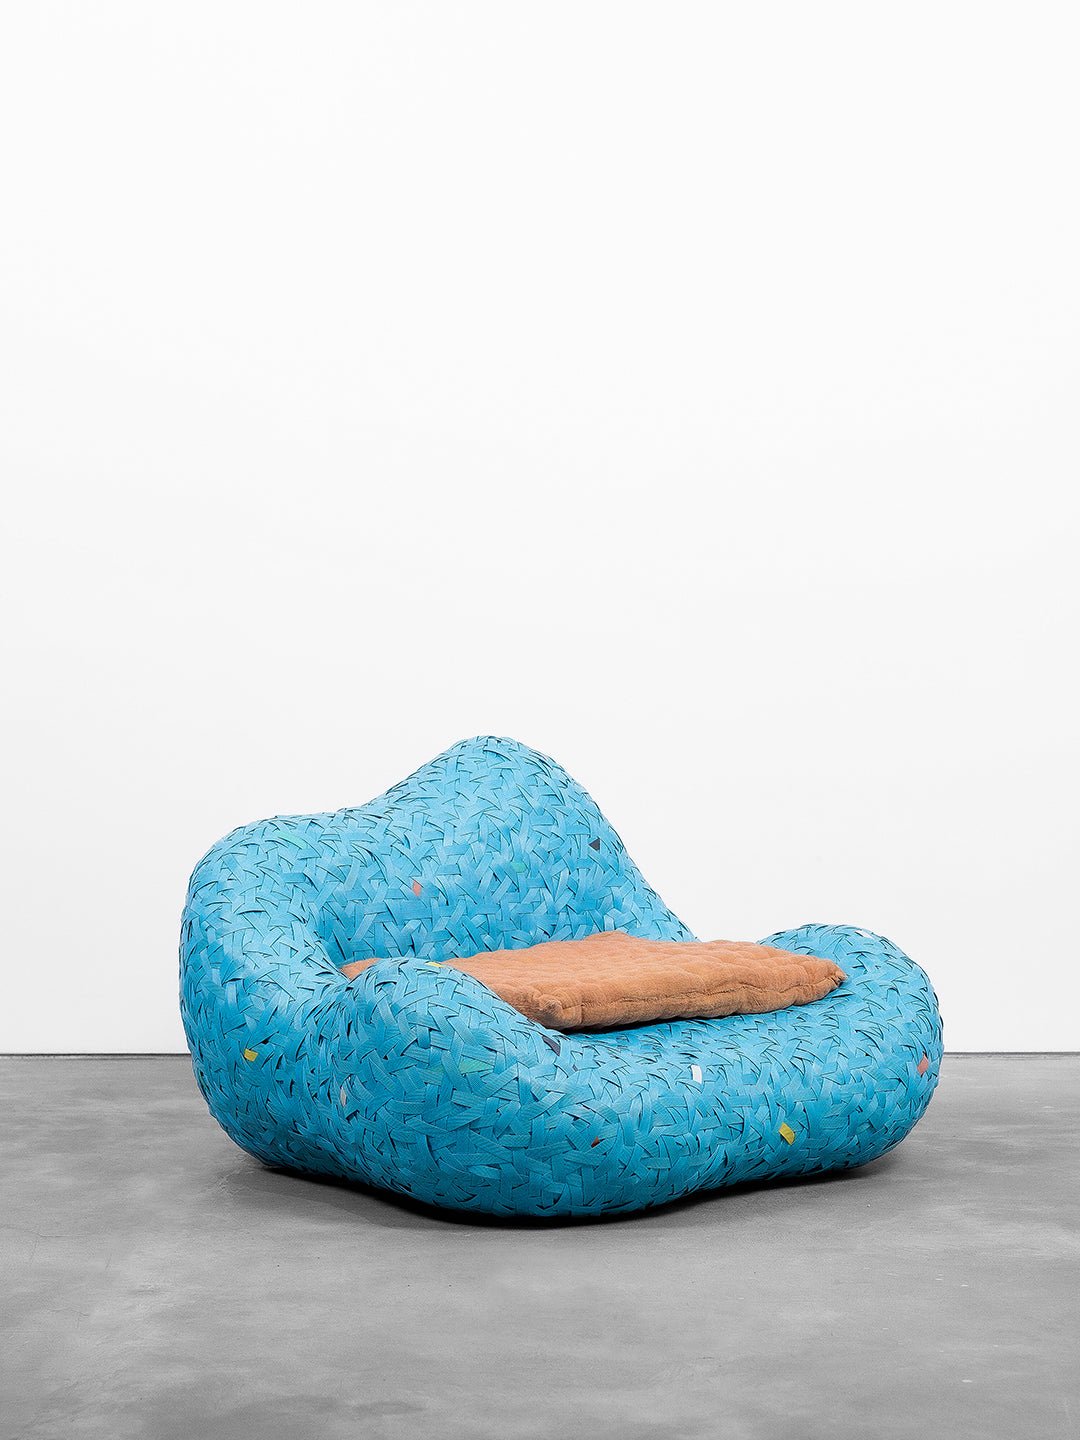 Artisanal Meditation Chair Blue